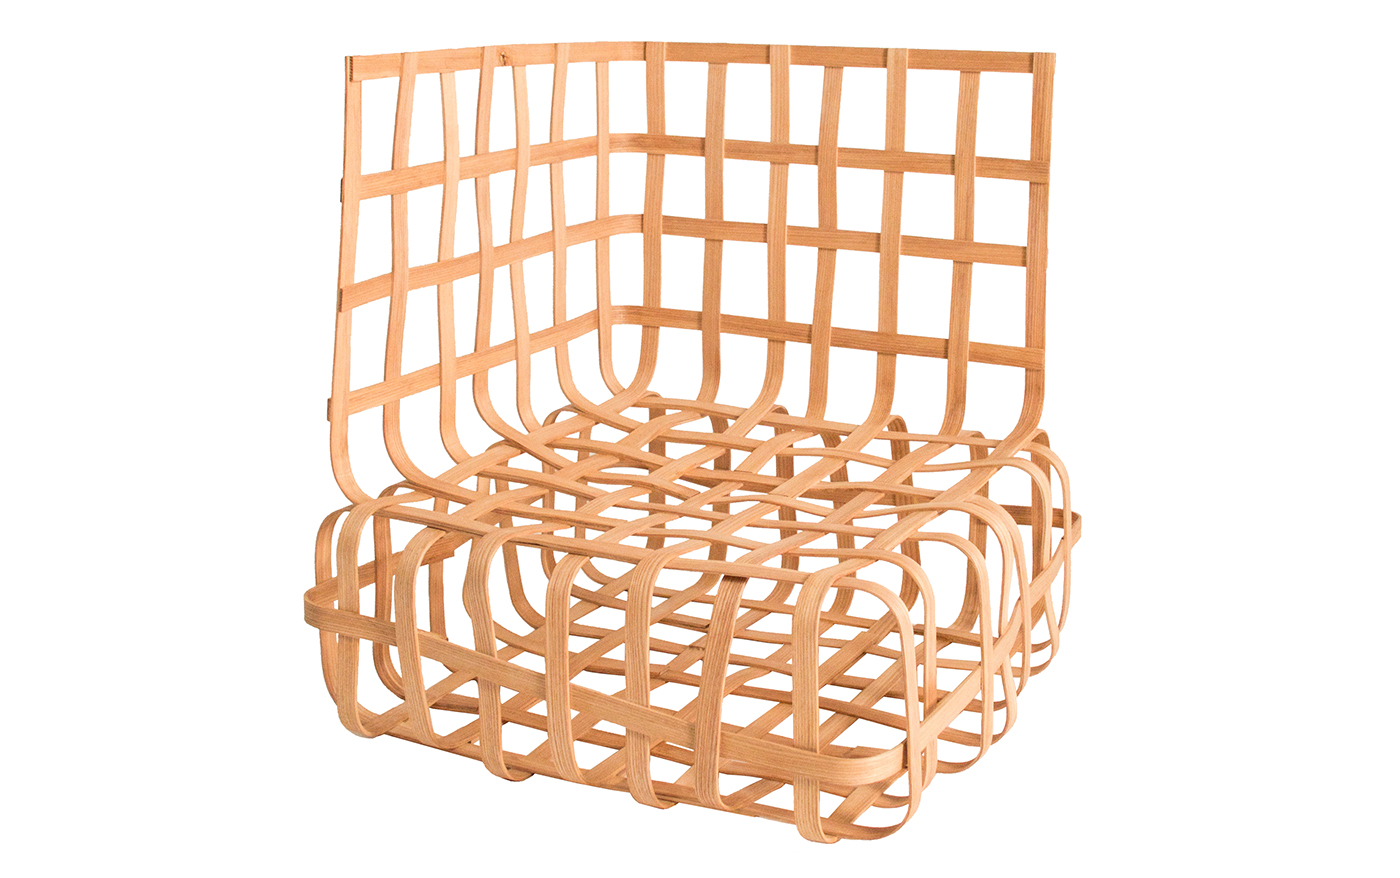 ash wood furniture design lattice grid chair